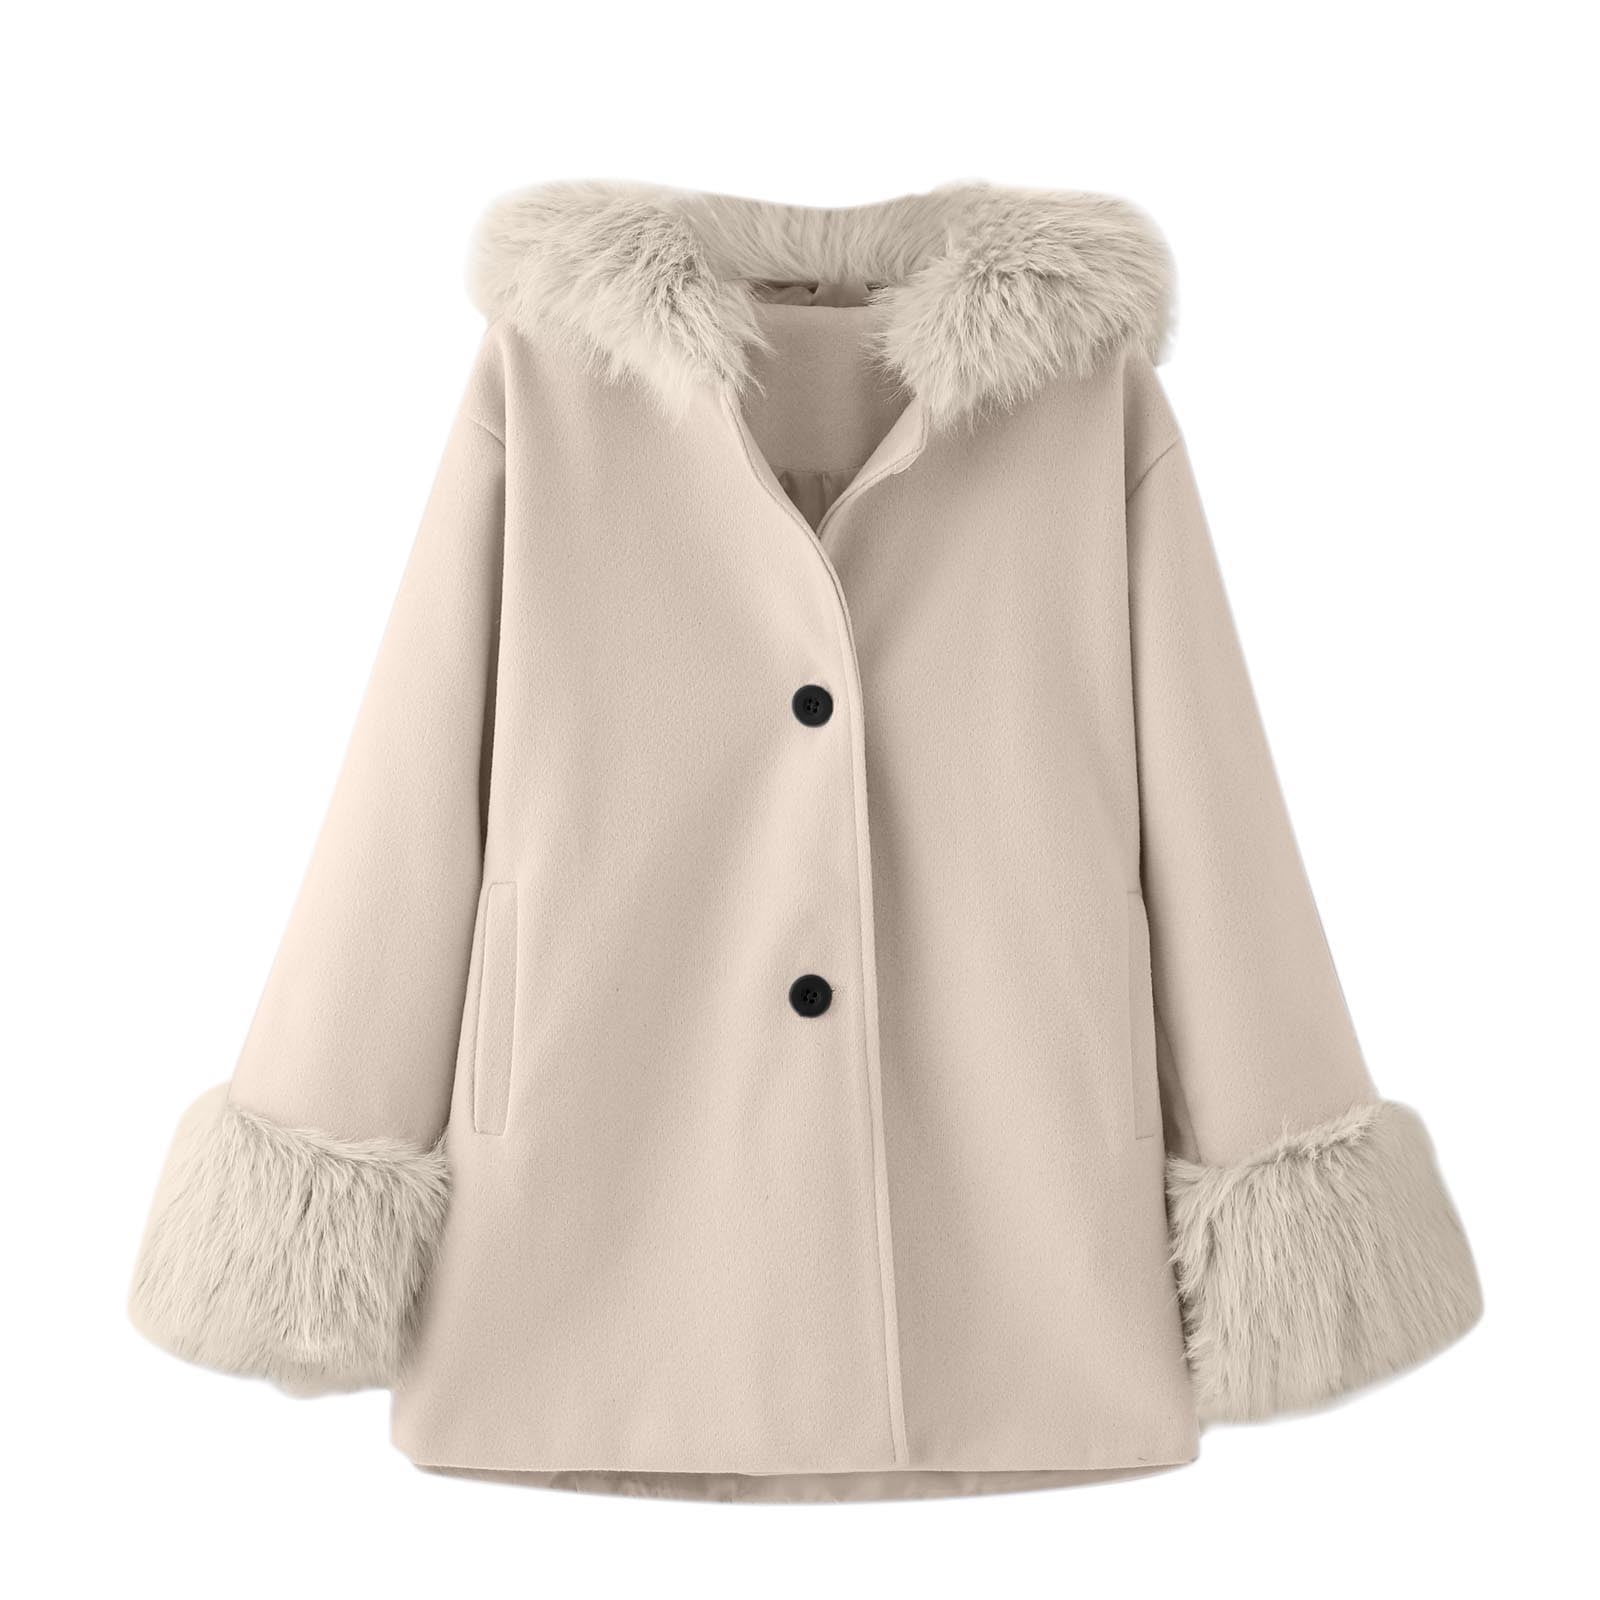 BOLUOYI Girls Winter Coat Size 8/9 Toddler Girls Winter Windproof Coat ...